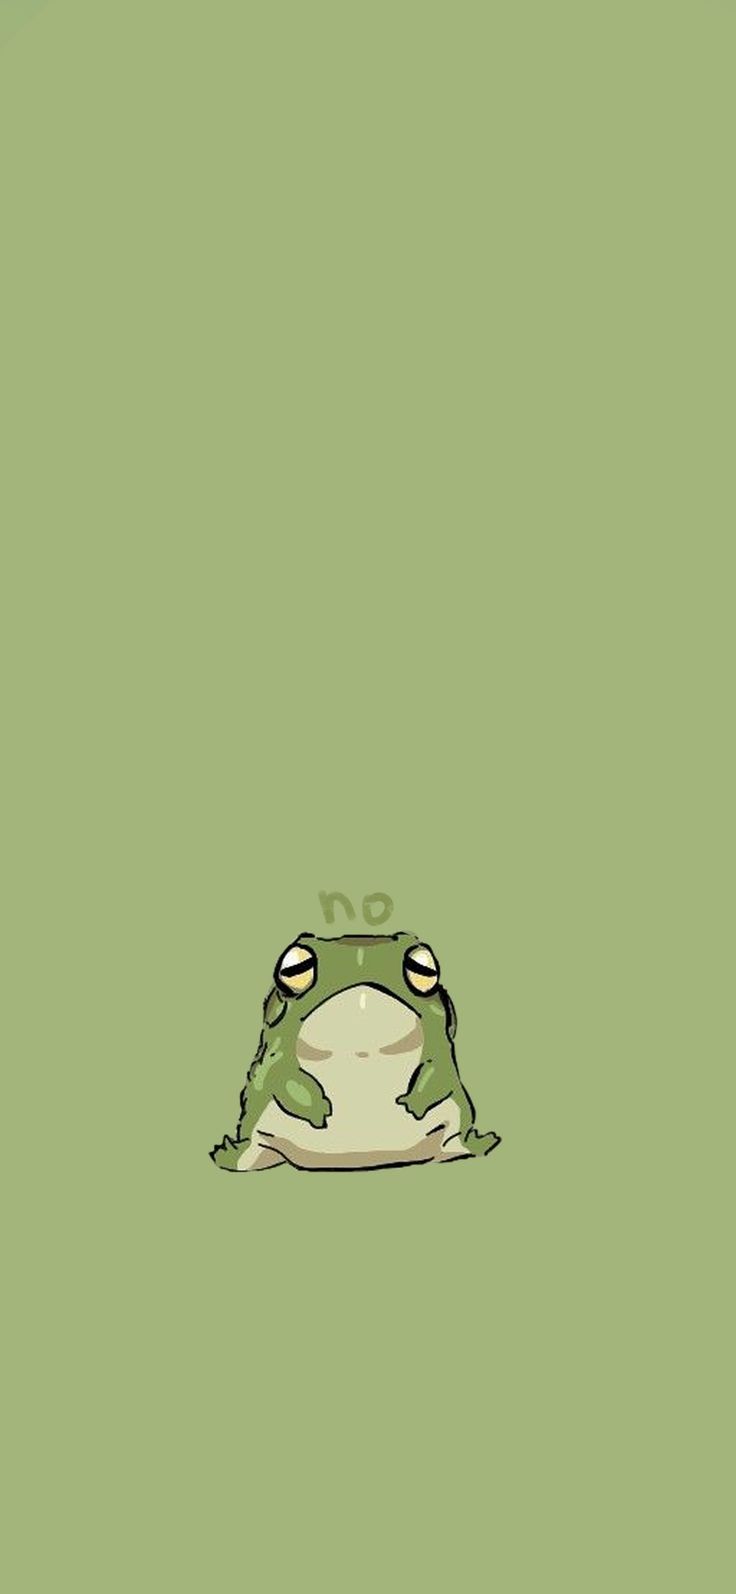 frog wallpaper. Frog wallpaper, Frog drawing, Cute cartoon wallpaper